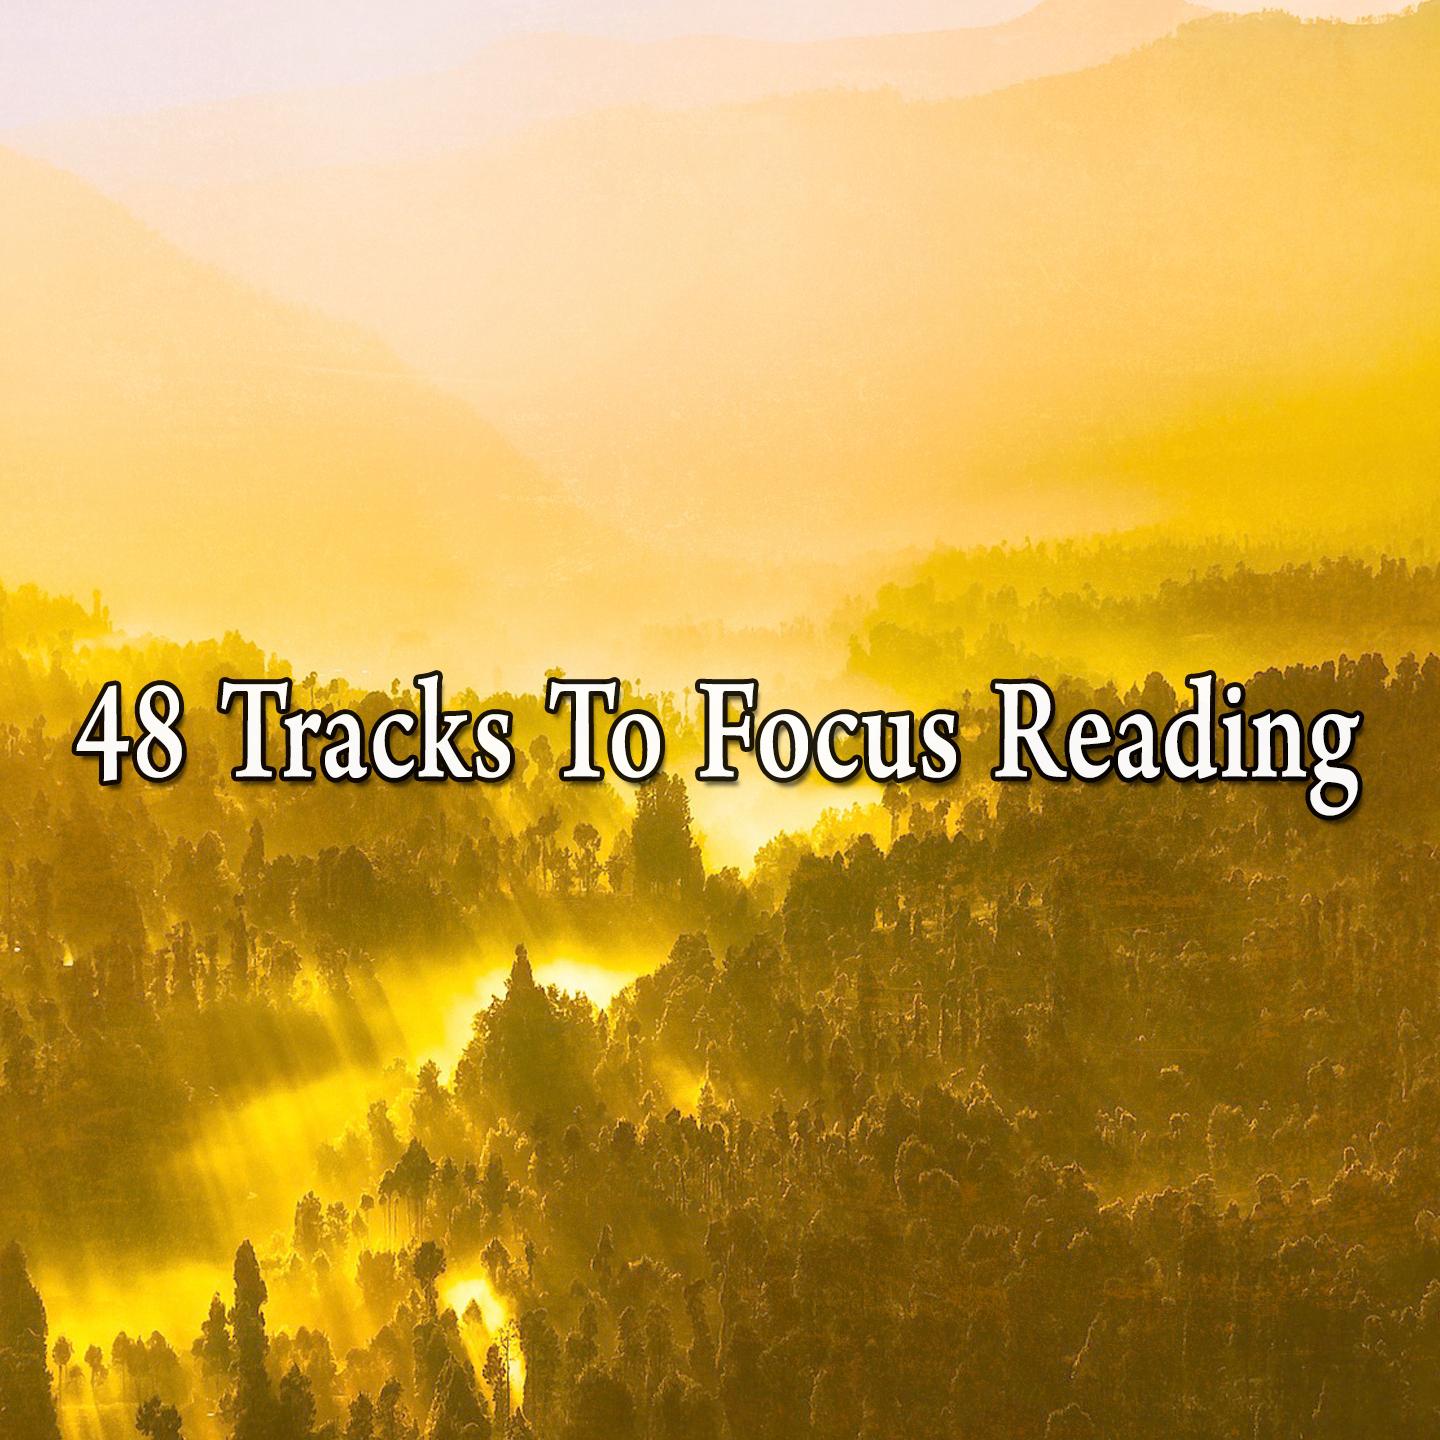 48 Tracks to Focus Reading